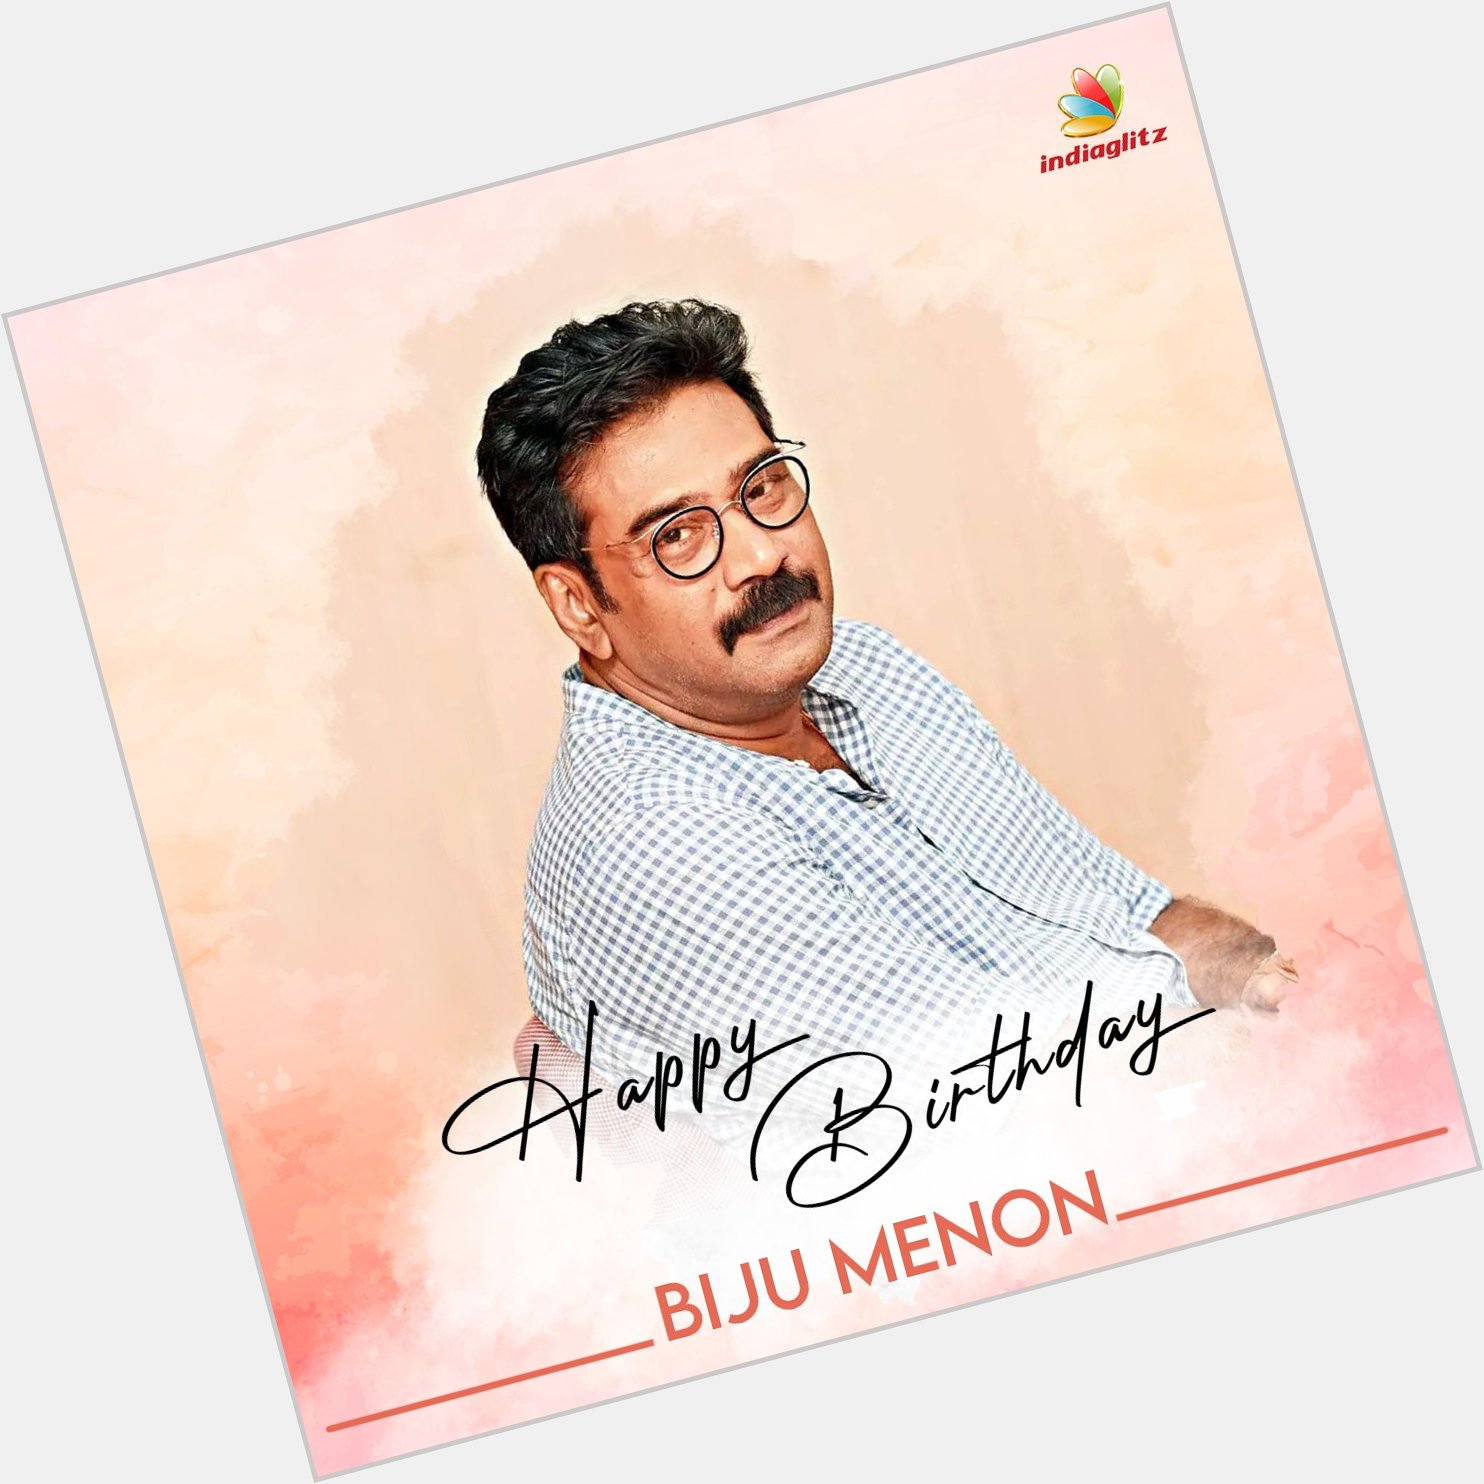 Wishing Actor Biju Menon a Very Happy Birthday   